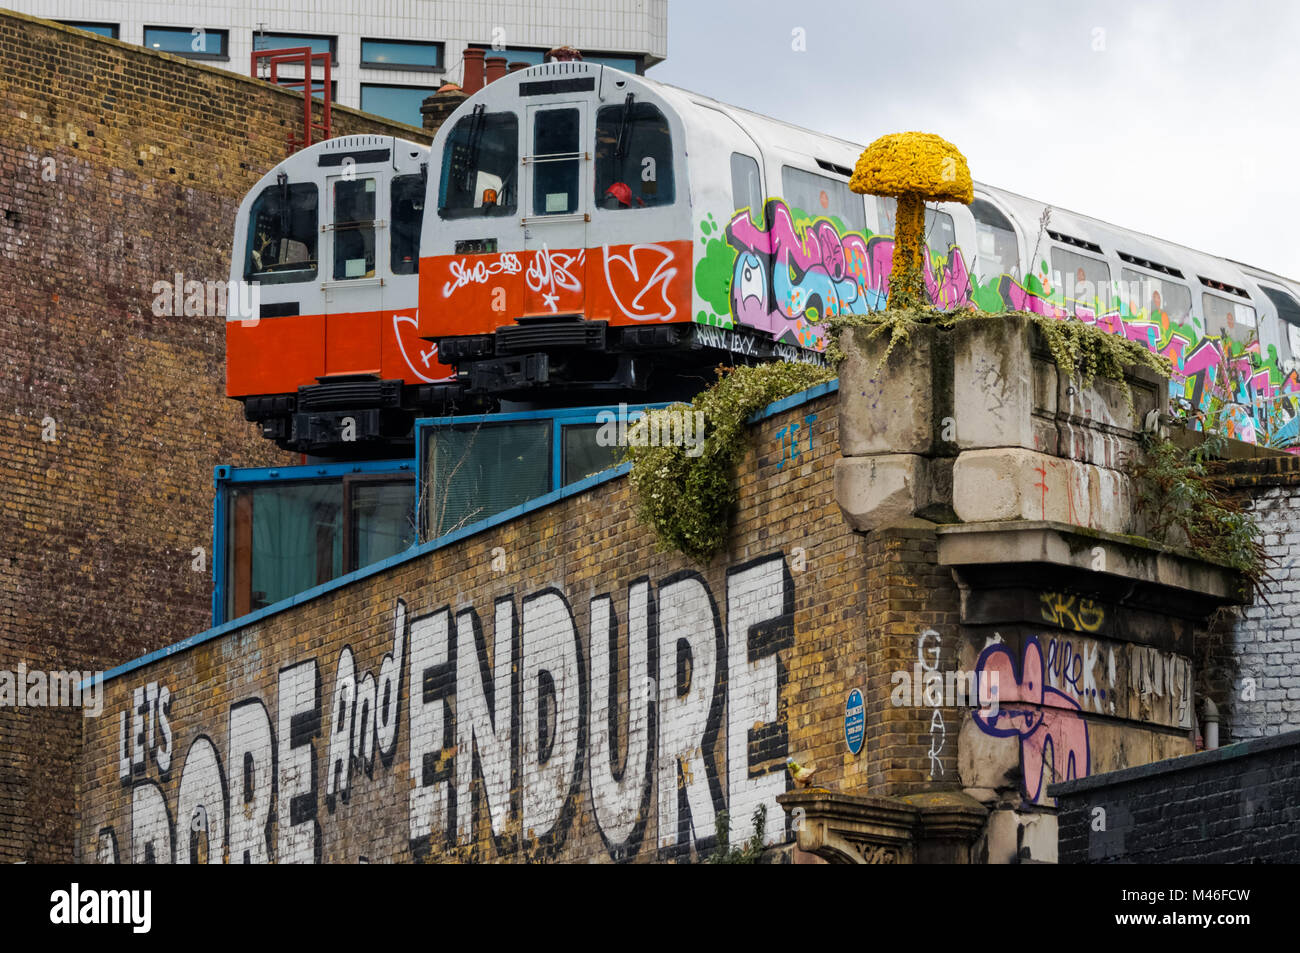 Village Underground with tube carriages in Shoreditch, London England United Kingdom UK Stock Photo